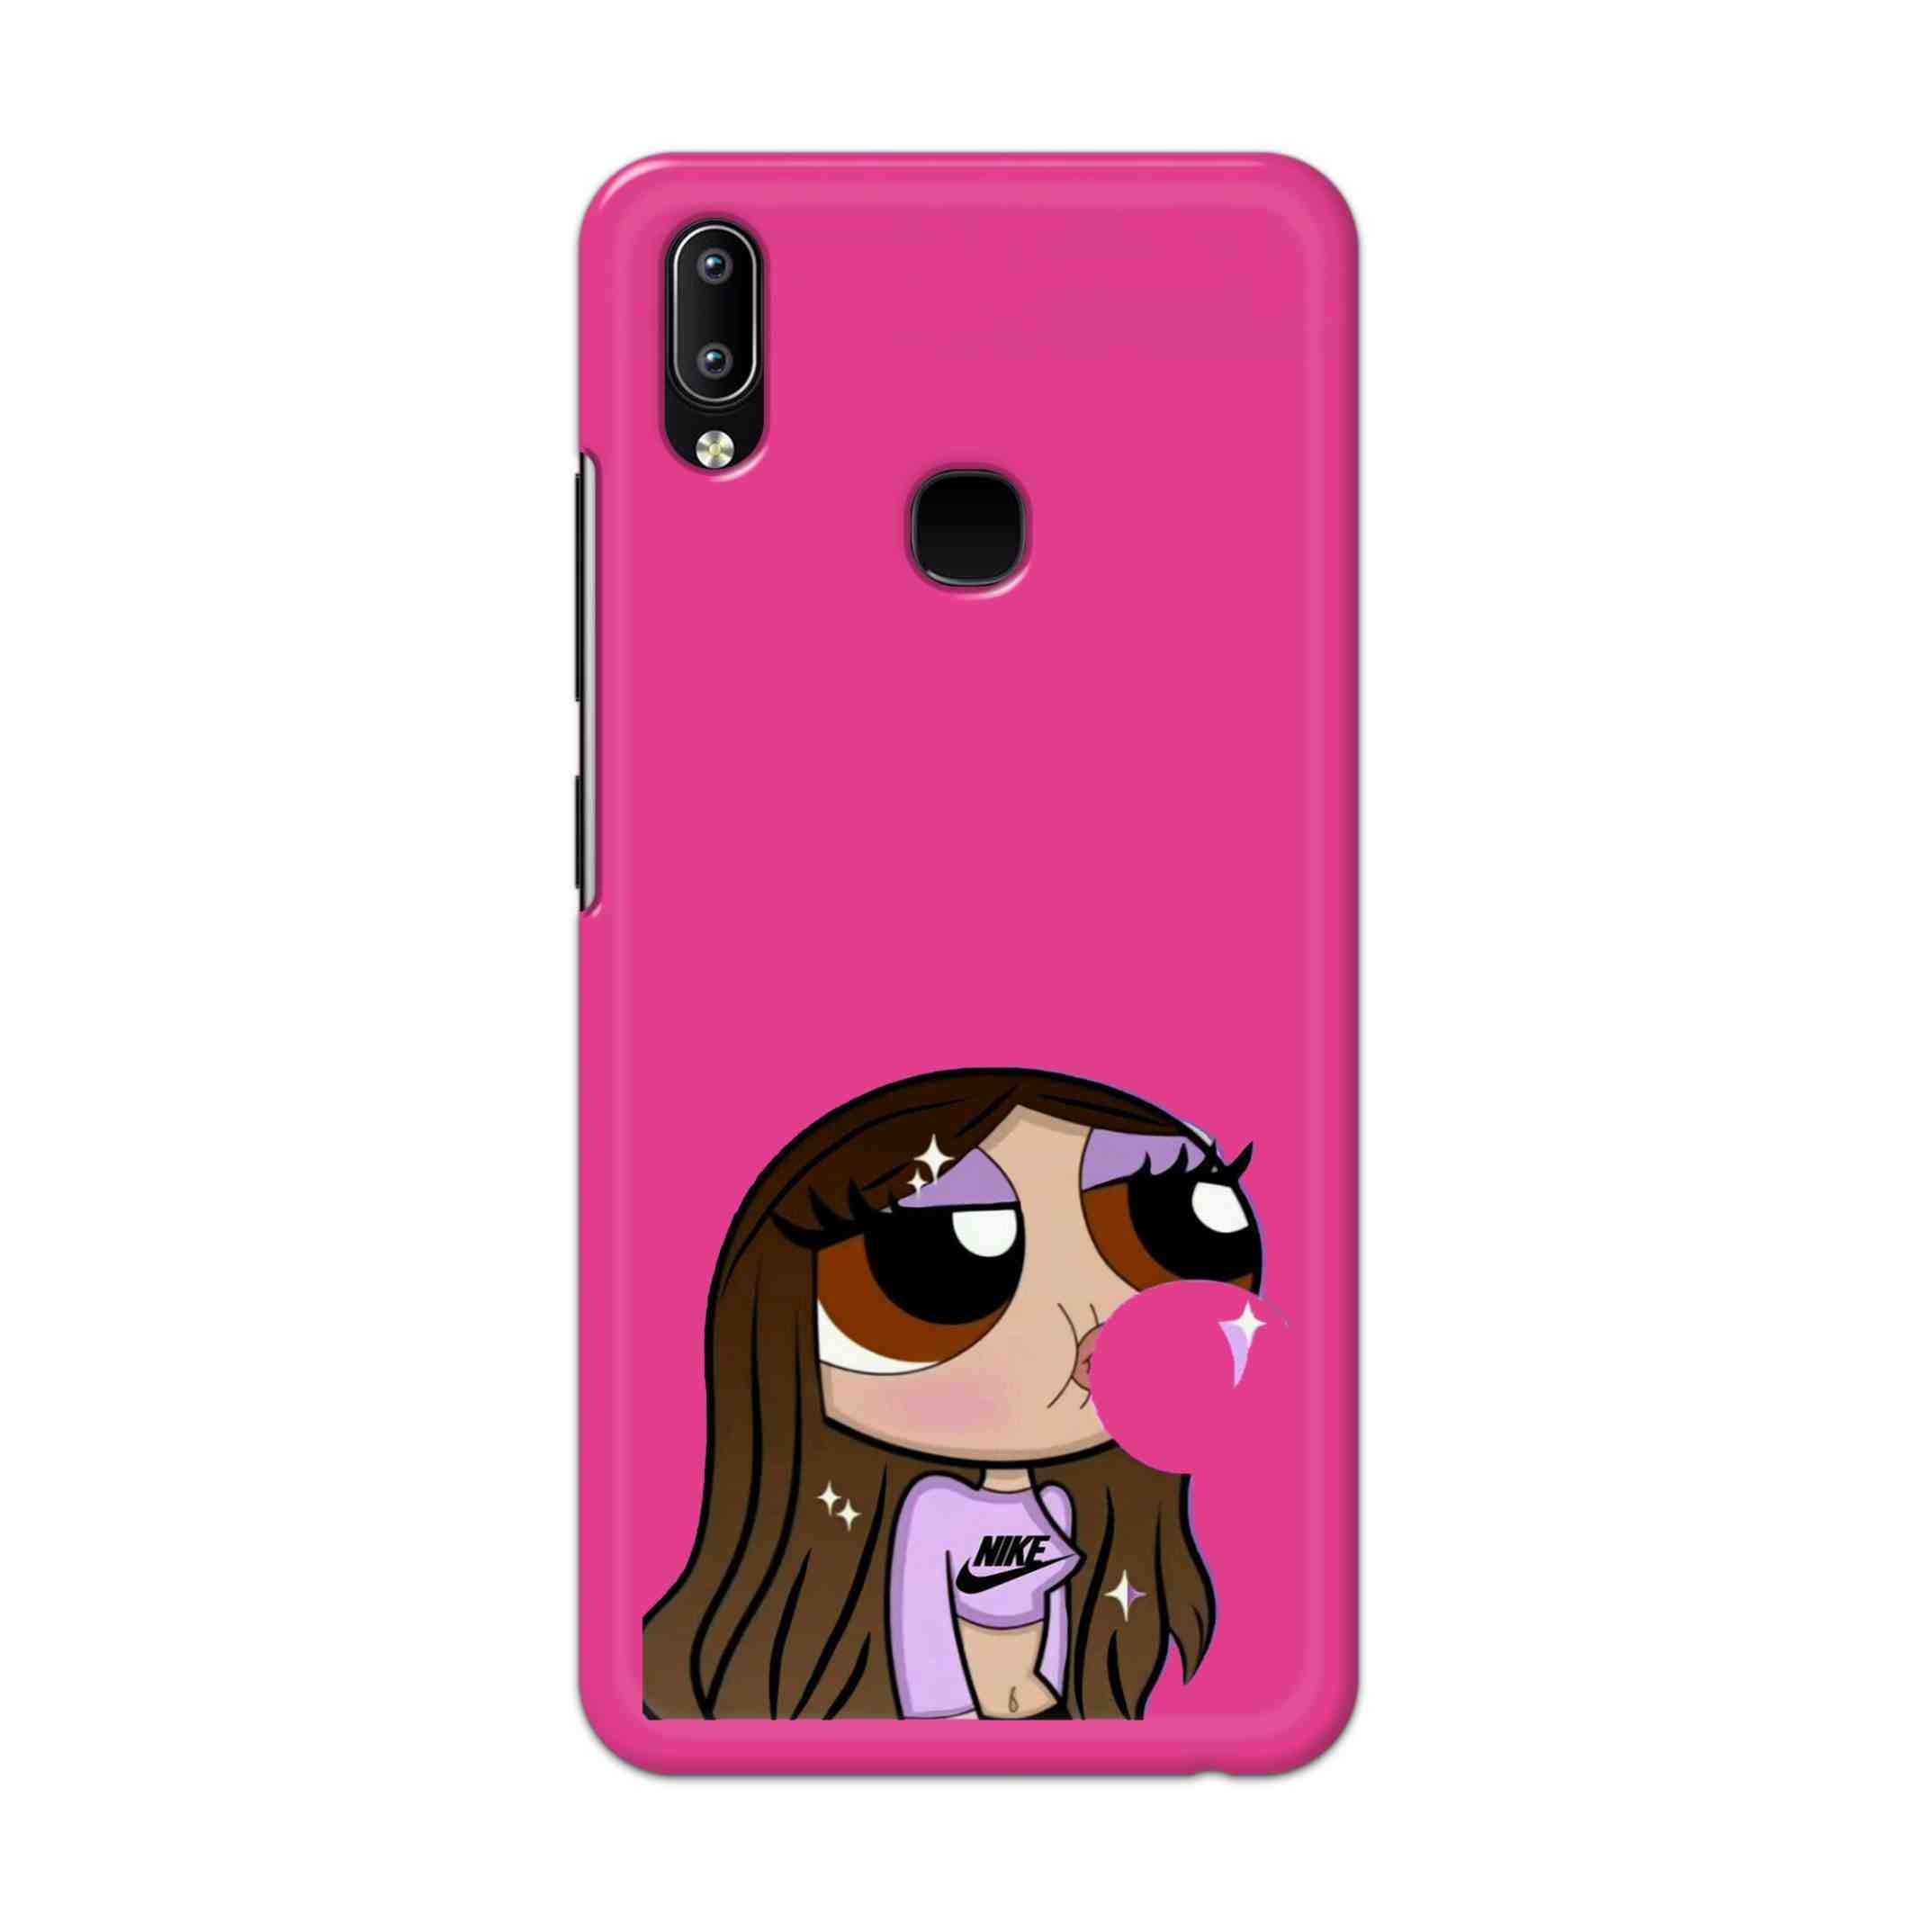 Buy Bubble Girl Hard Back Mobile Phone Case Cover For Vivo Y95 / Y93 / Y91 Online